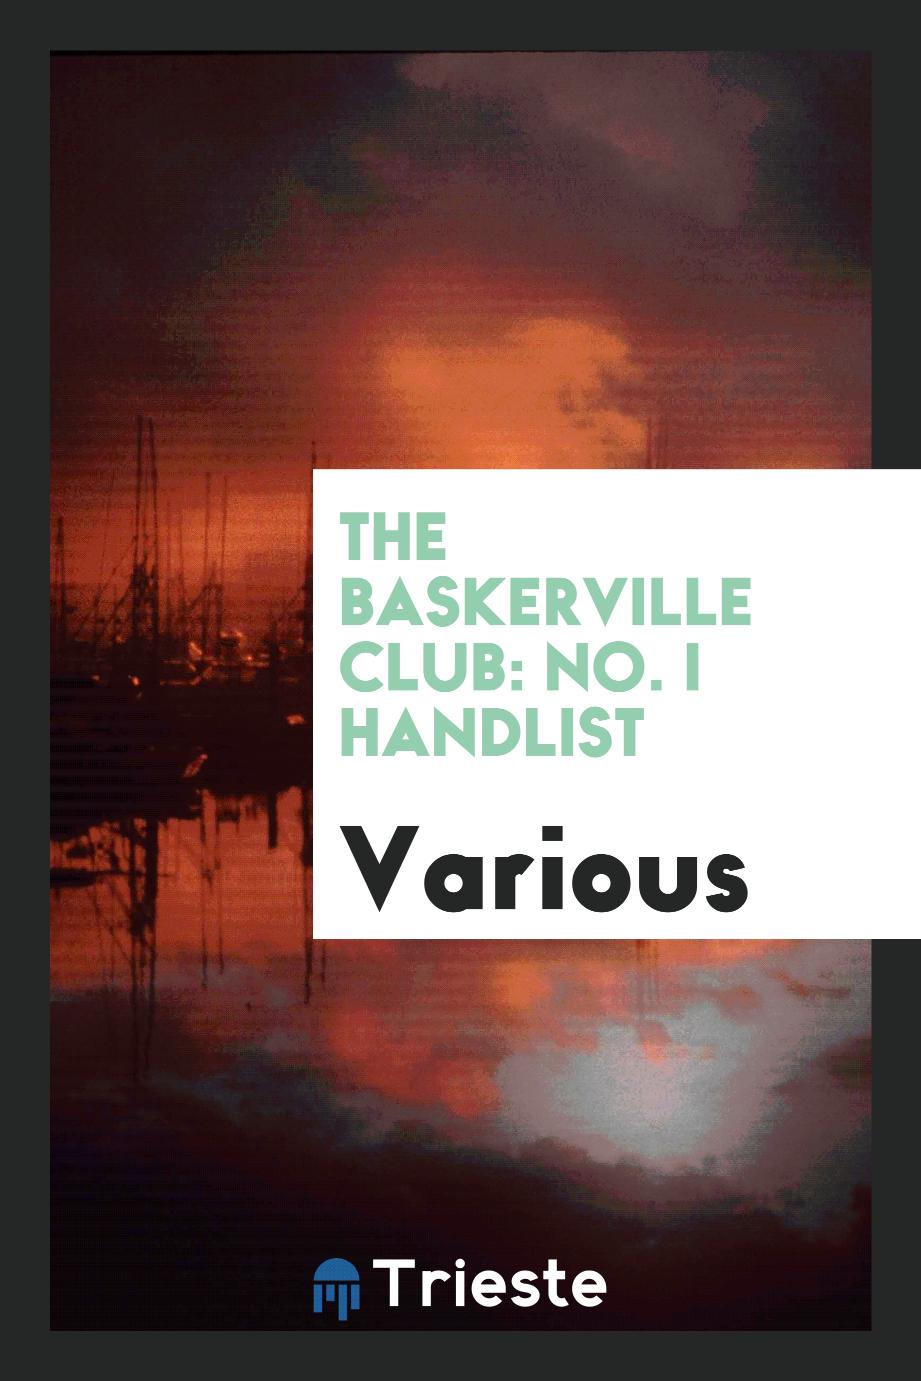 The Baskerville club: No. I Handlist